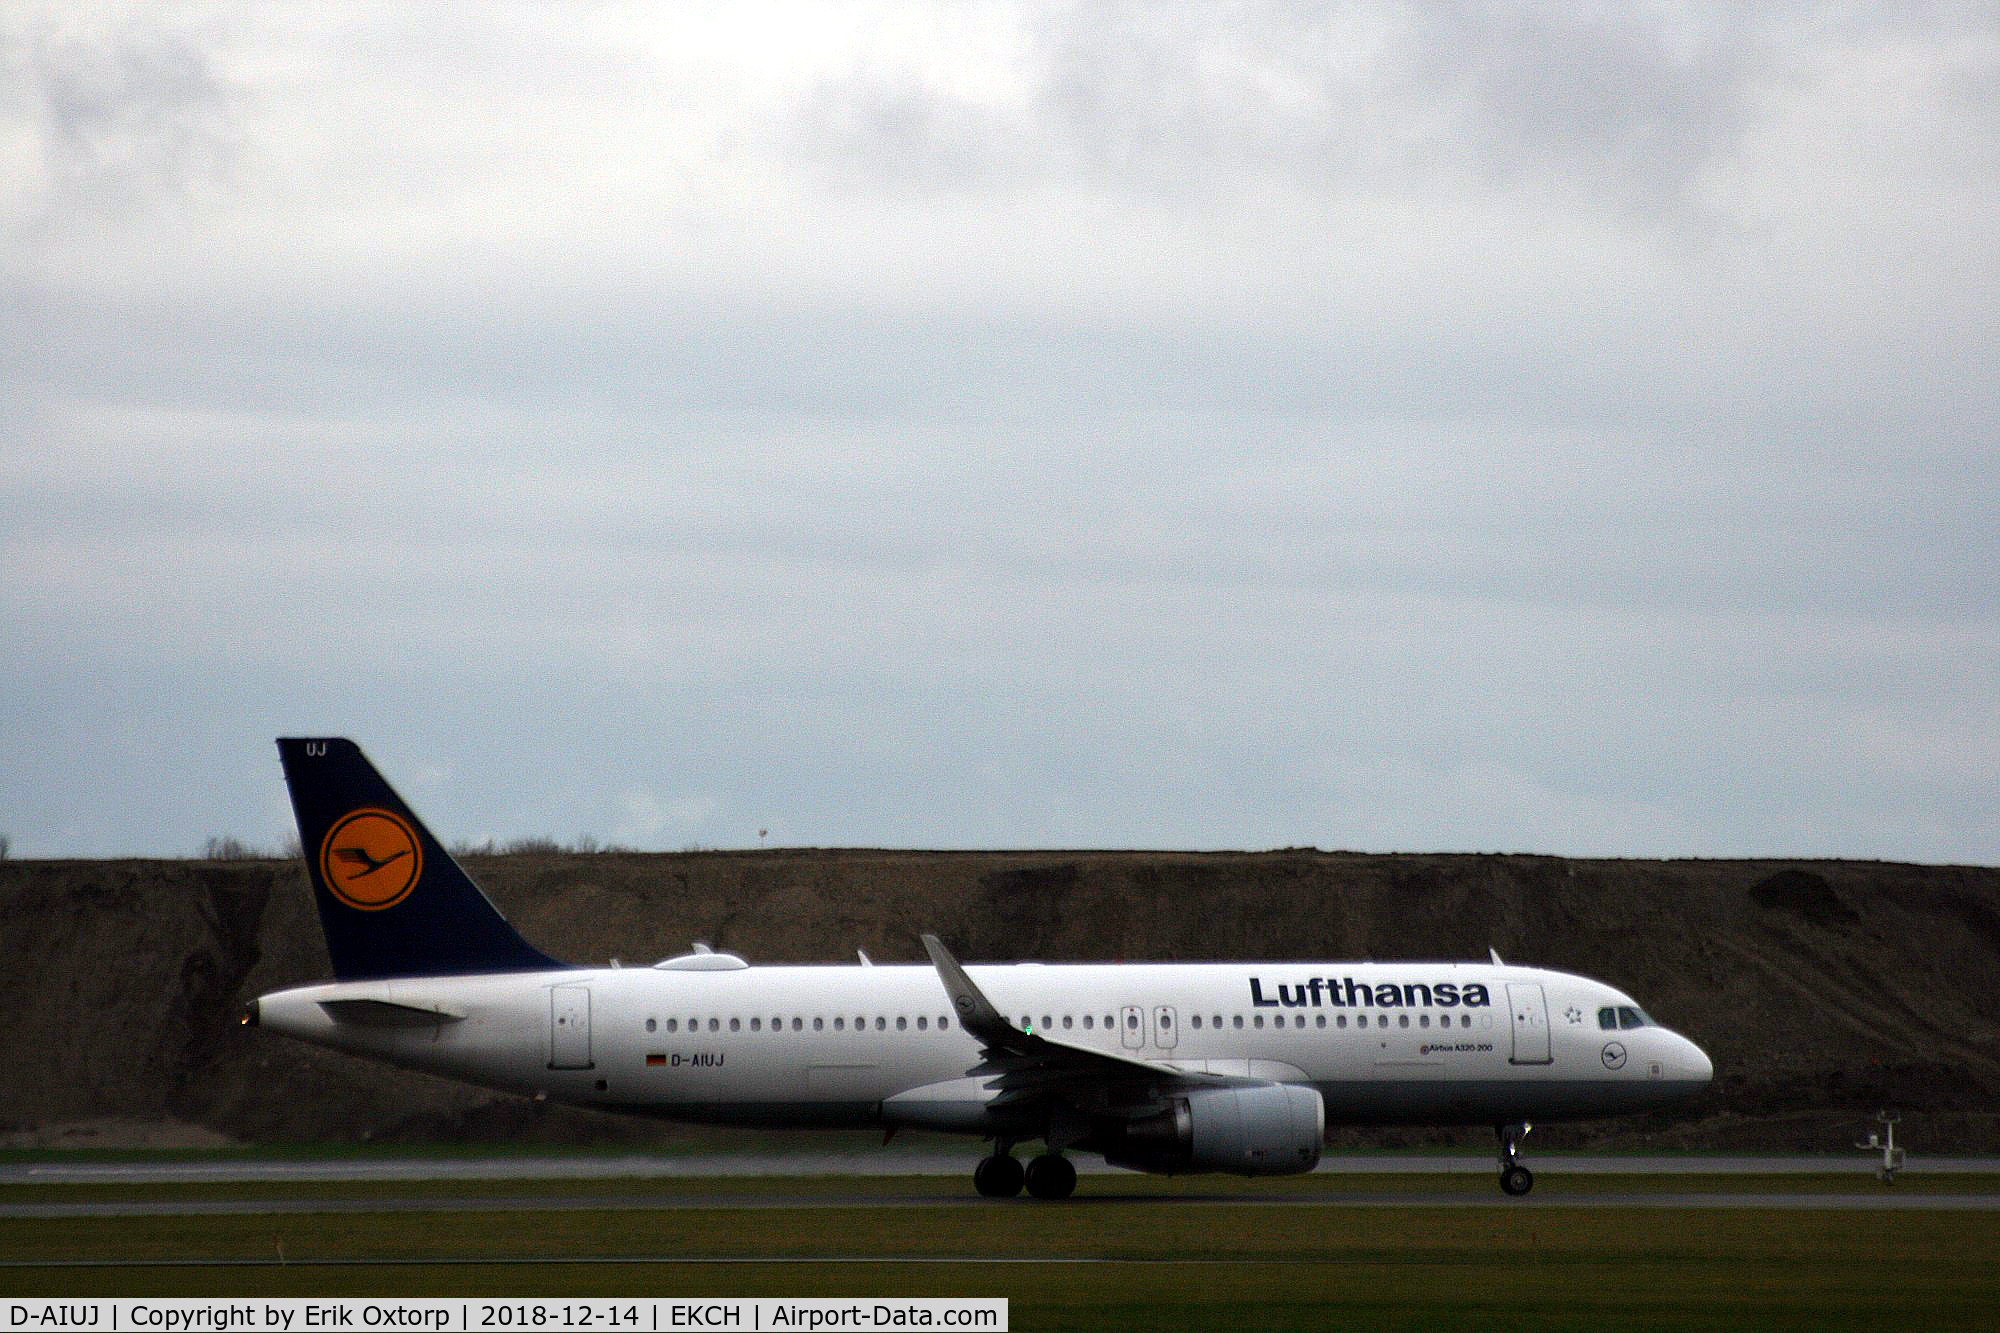 D-AIUJ, 2014 Airbus A320-214 C/N 6301, D-AIUJ taxing for takeoff rw 04R